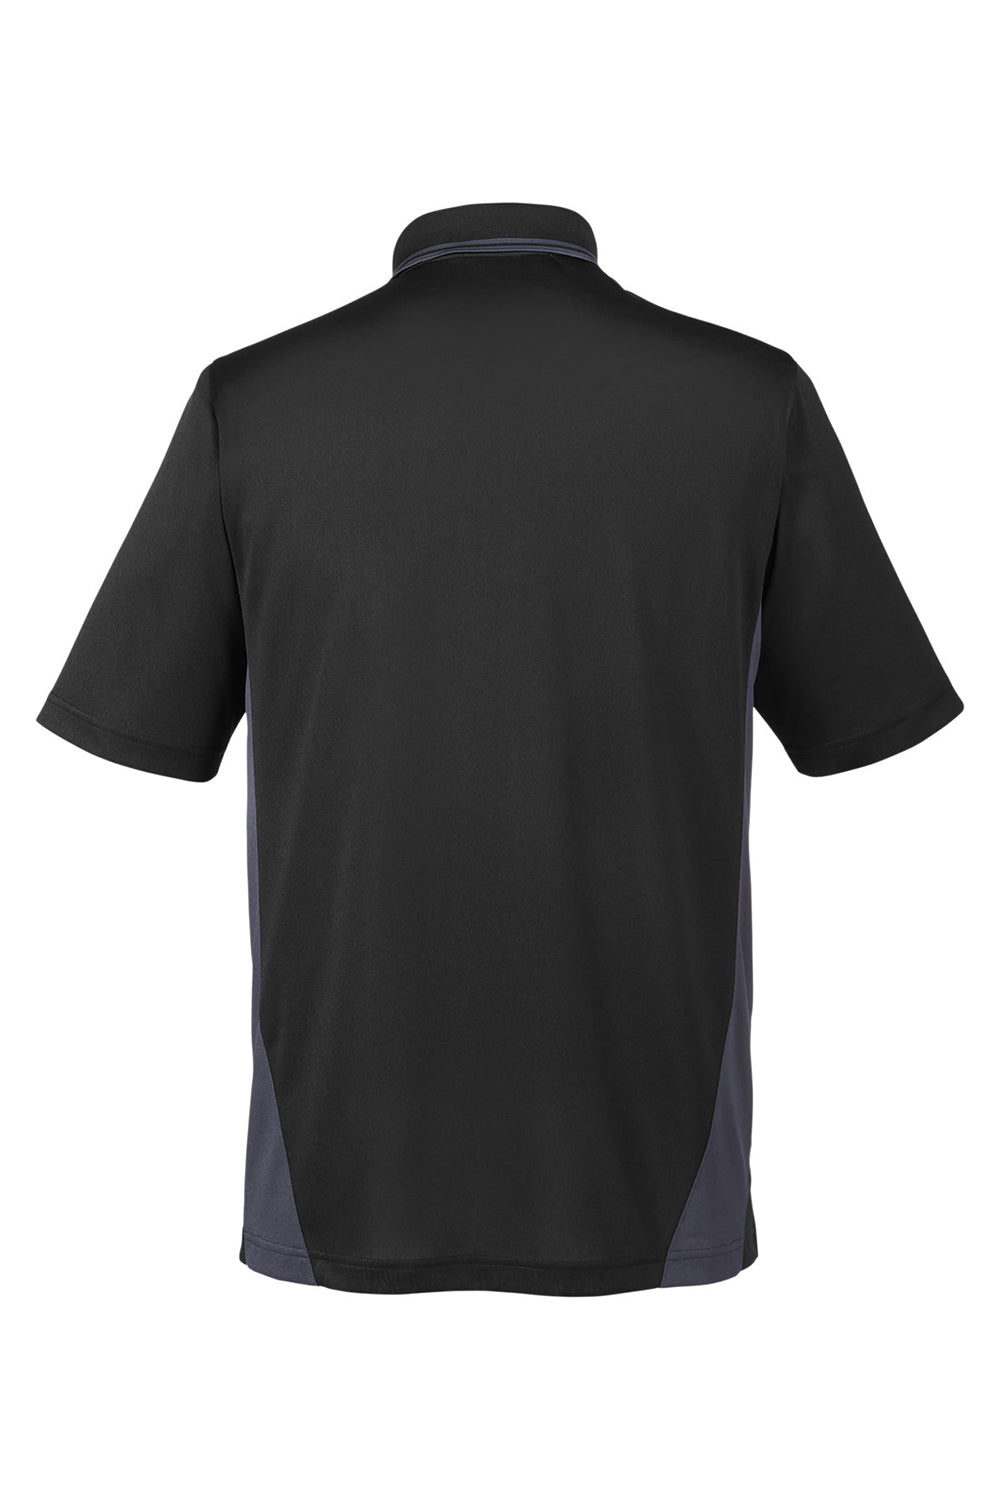 Harriton M386/M386T Mens Flash Performance Moisture Wicking Colorblock Short Sleeve Polo Shirt Black/Dark Charcoal Grey Flat Back